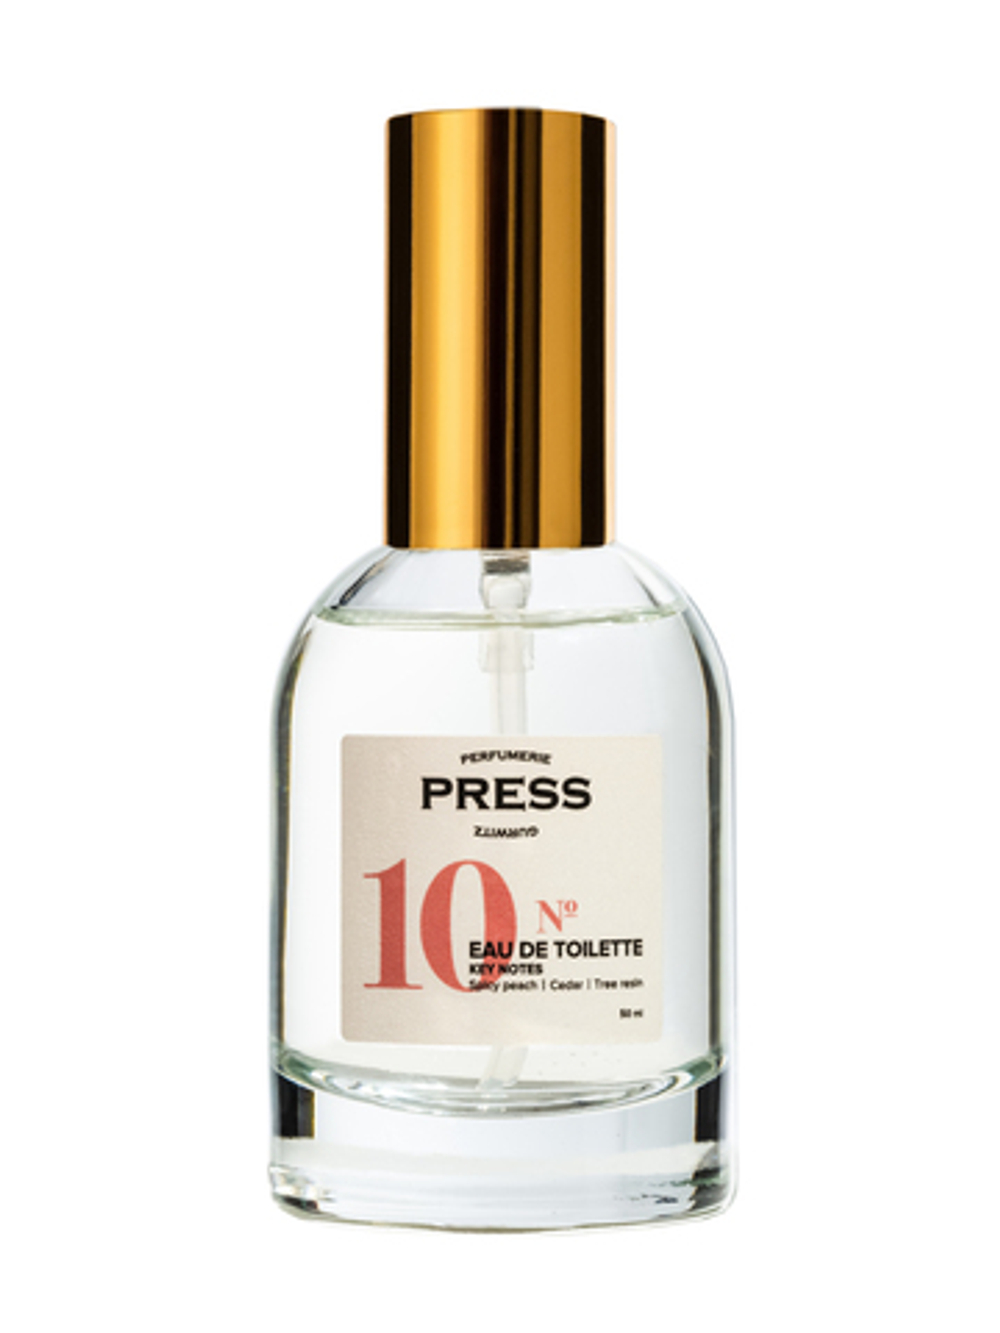 Туалетная вода №10 Press Gurwitz Perfumie с нотами пряного персика, кедра и смолы, 50 мл